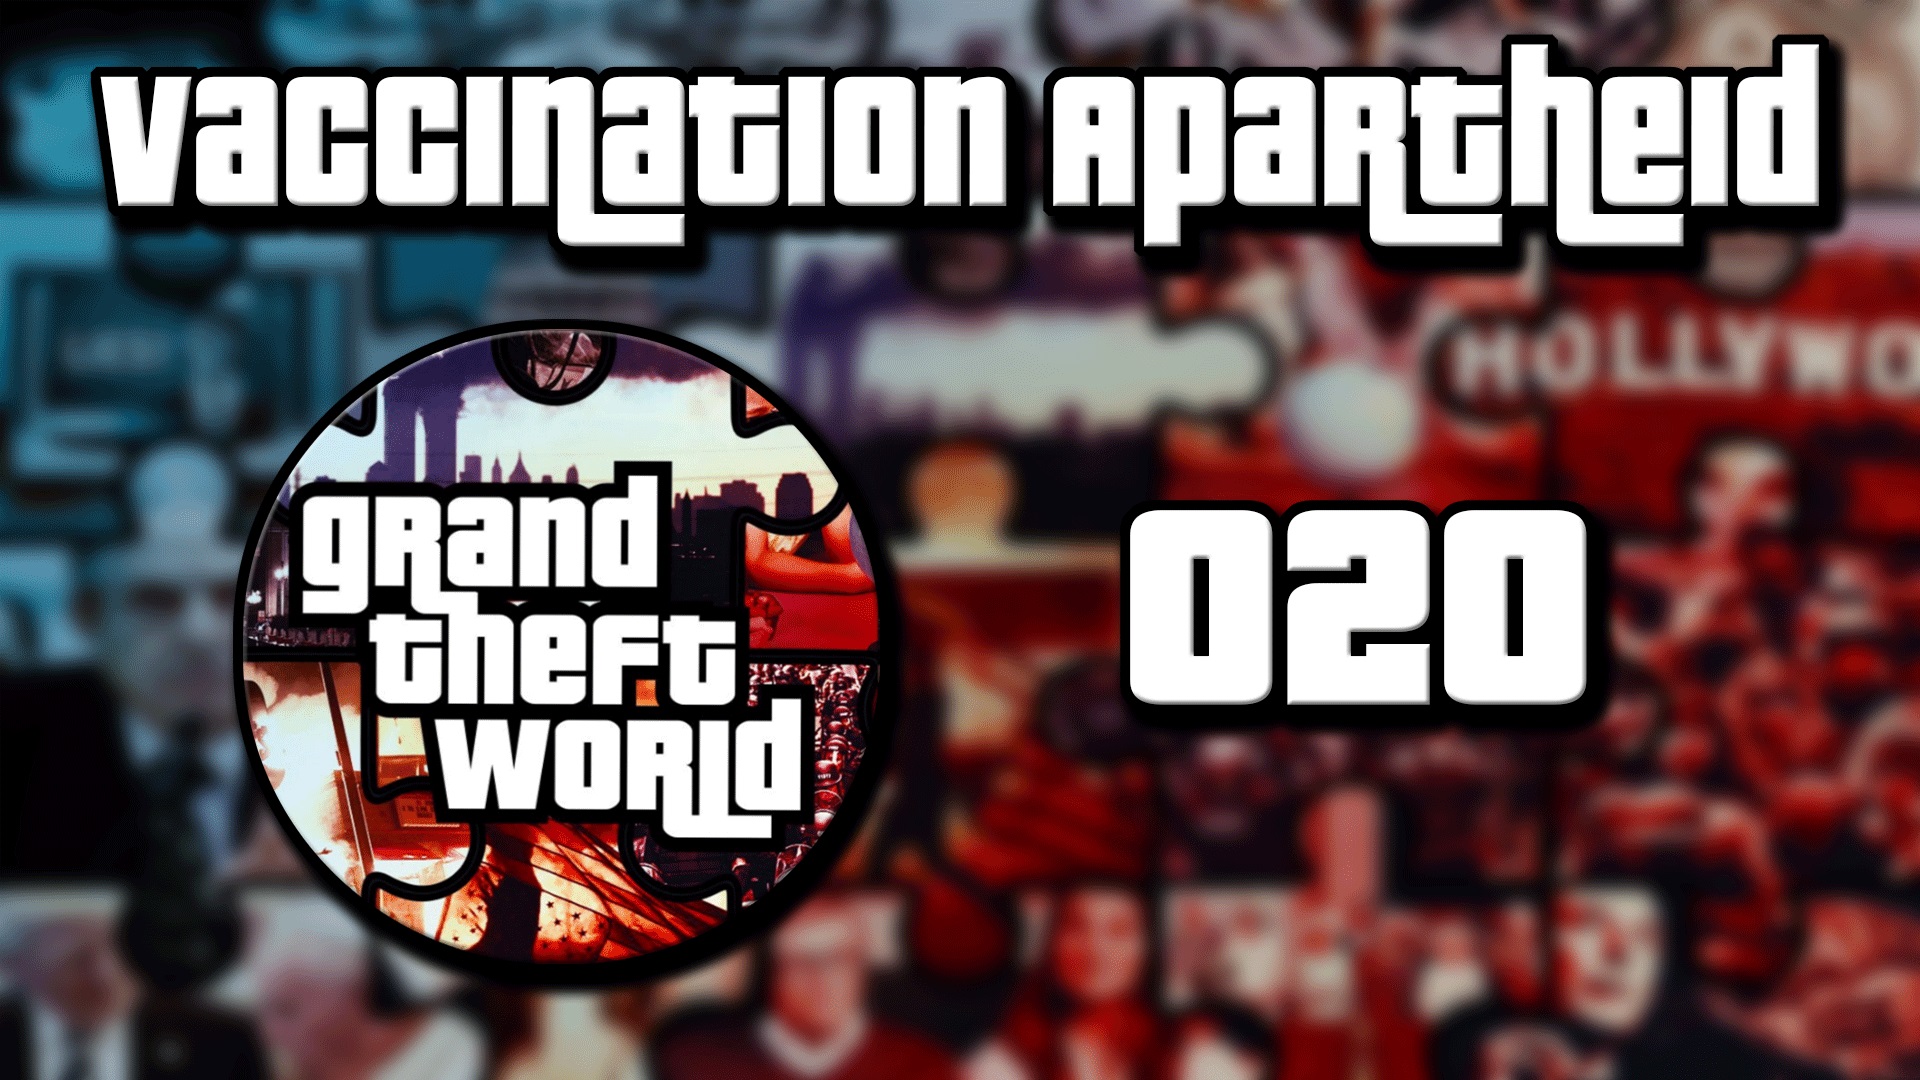 Grand Theft World Podcast 020 | Vaccination Apartheid